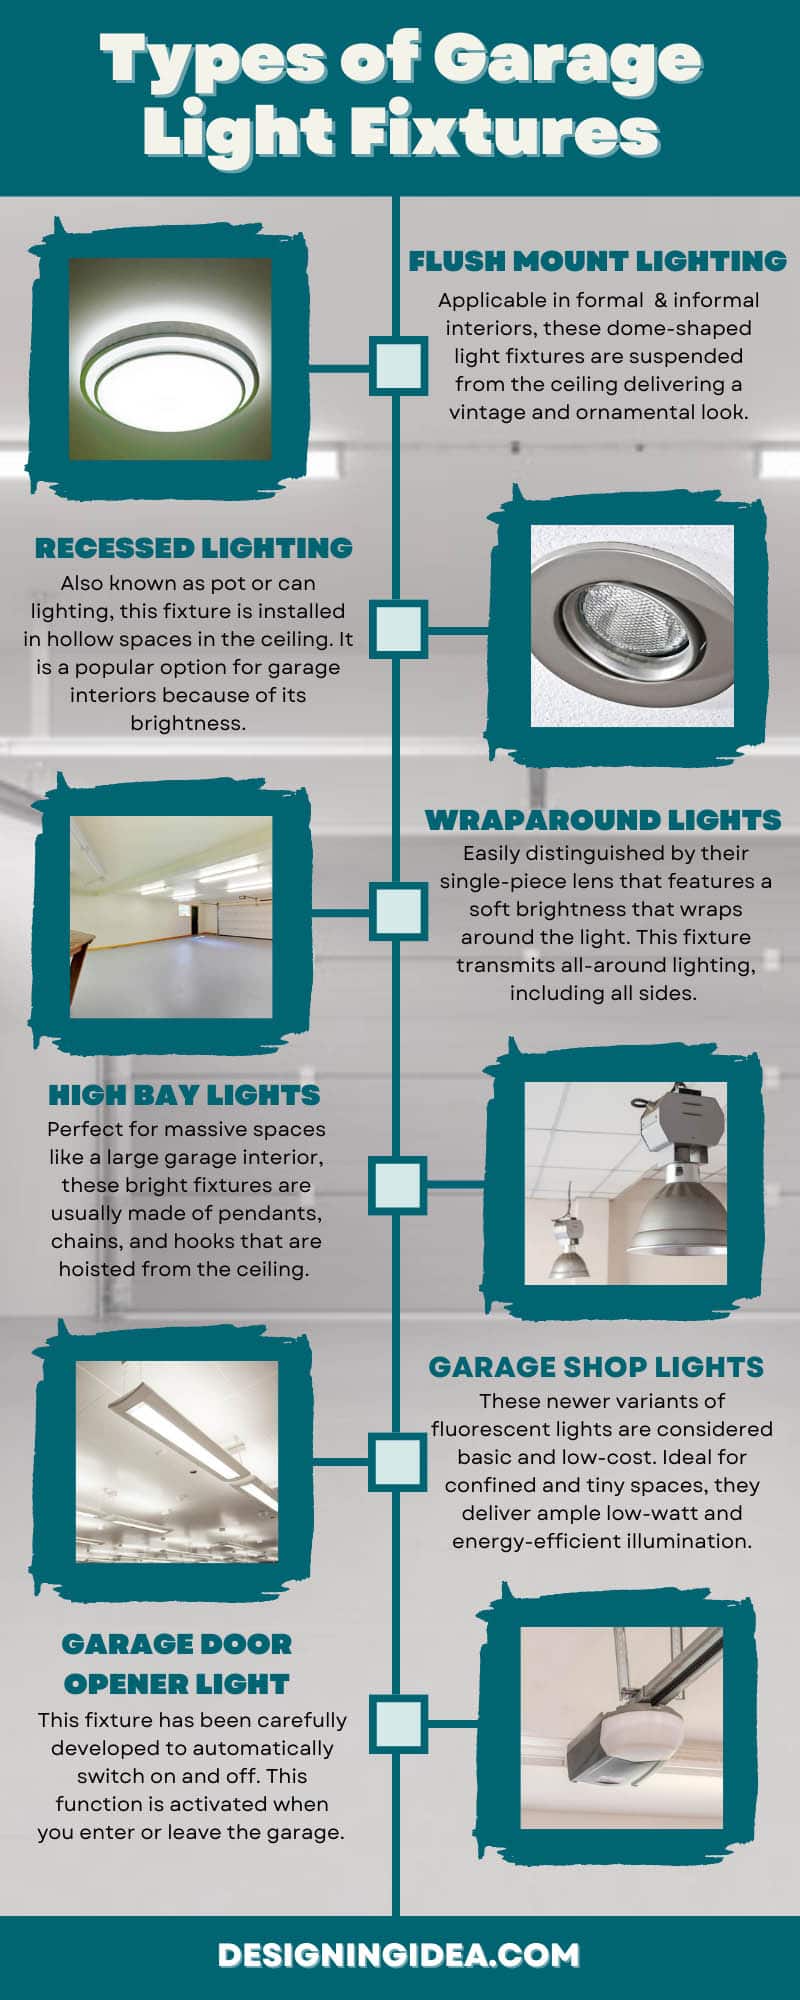 Types of Garage Light Fixtures Infographic